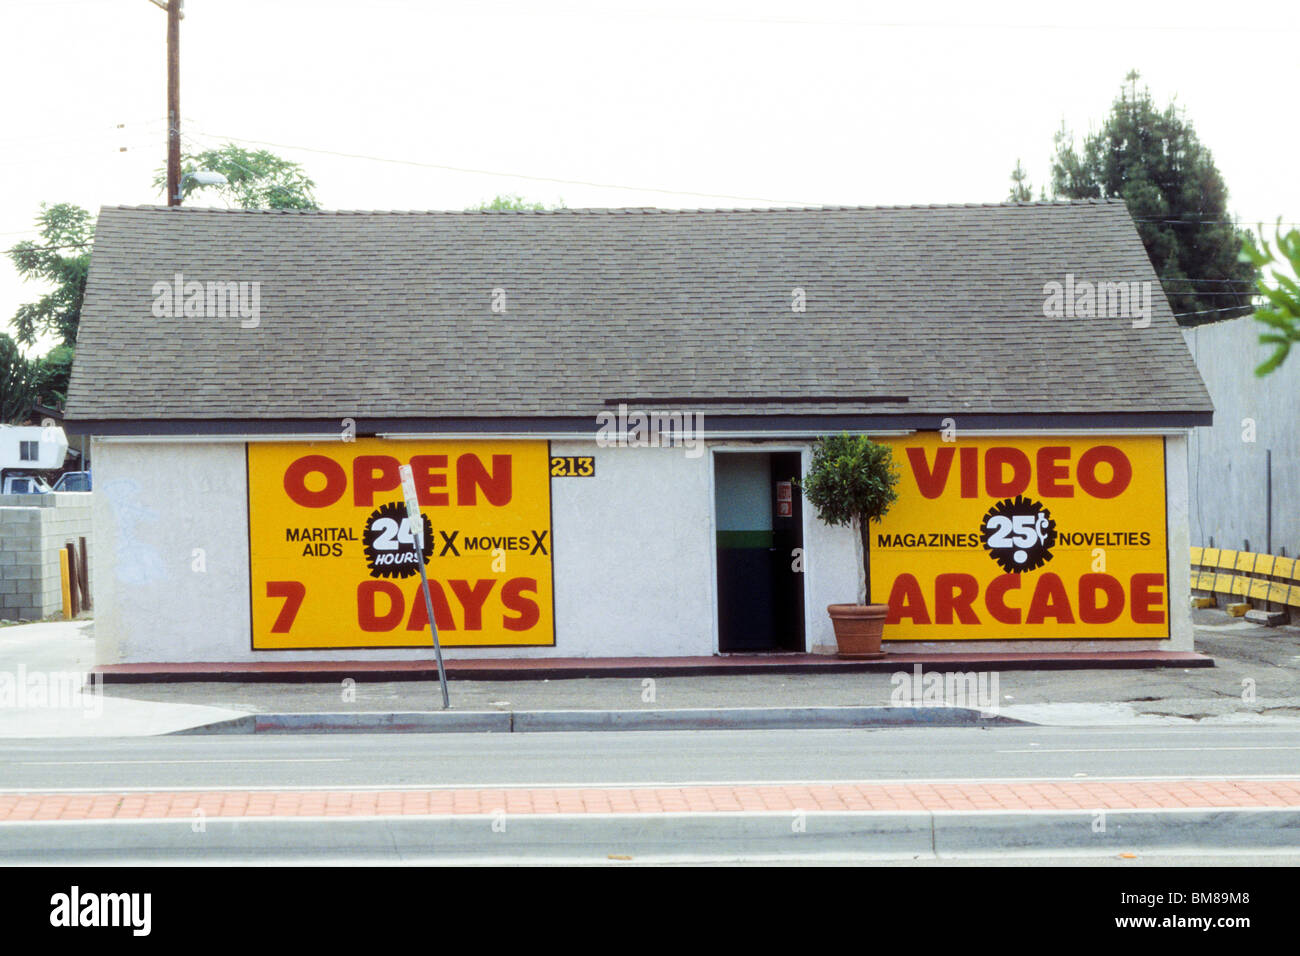 Adult video arcade sex shop Santa Ana California USA Stock Photo pic